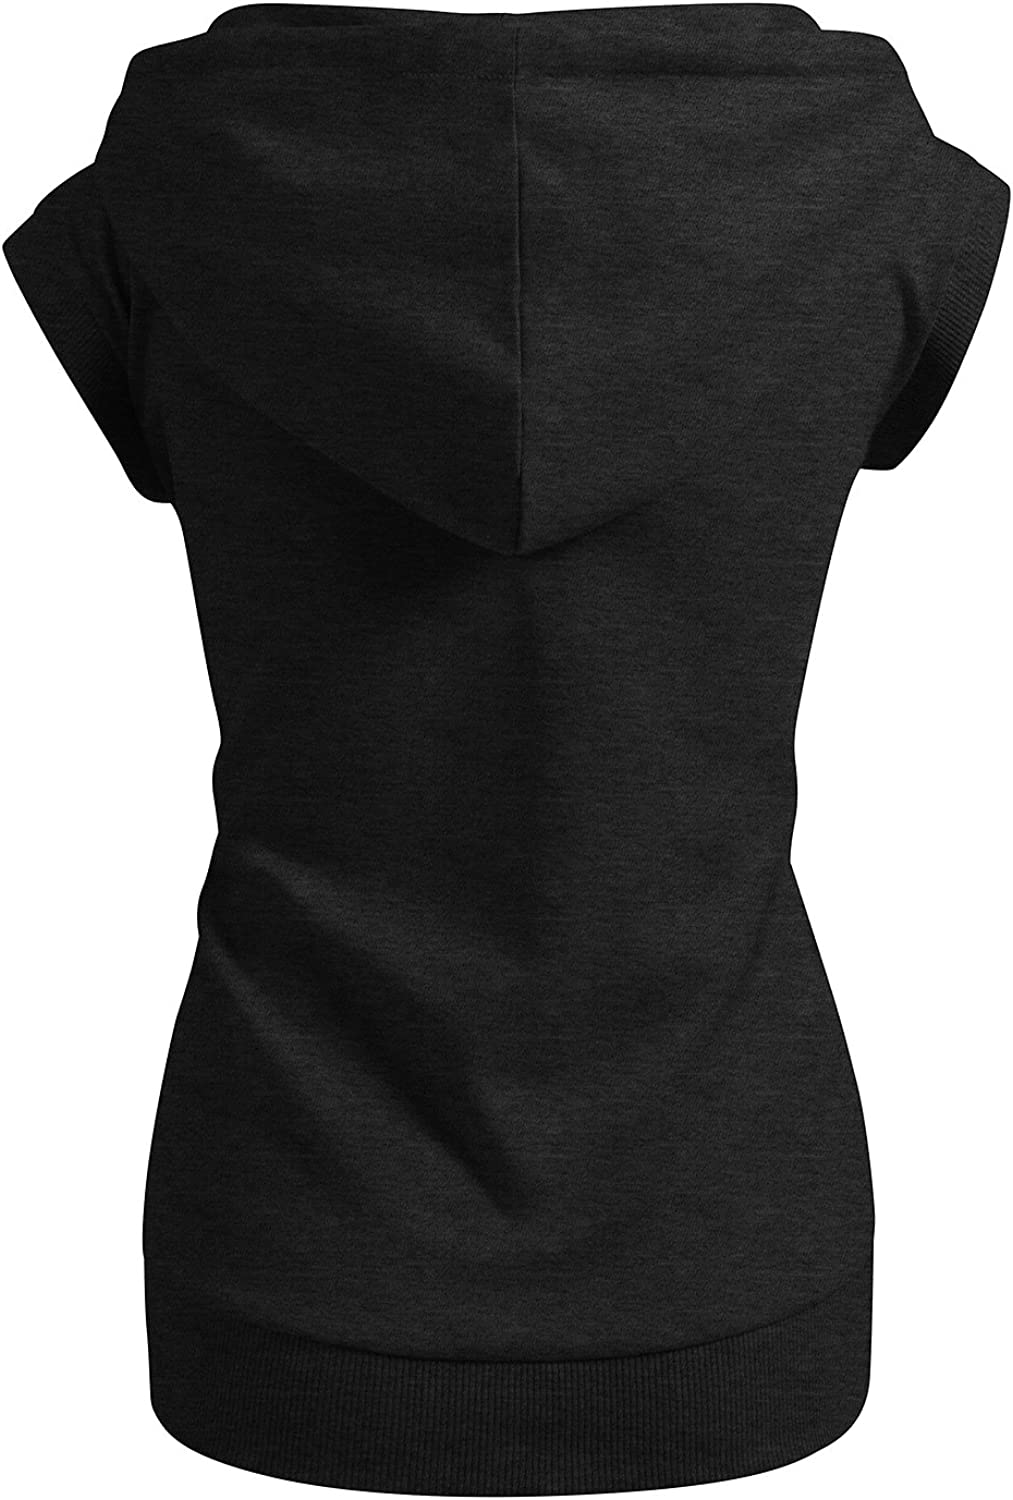 Wholesale Women's Short Sleeve Fleece Hoody Classic Drawstring Pullover